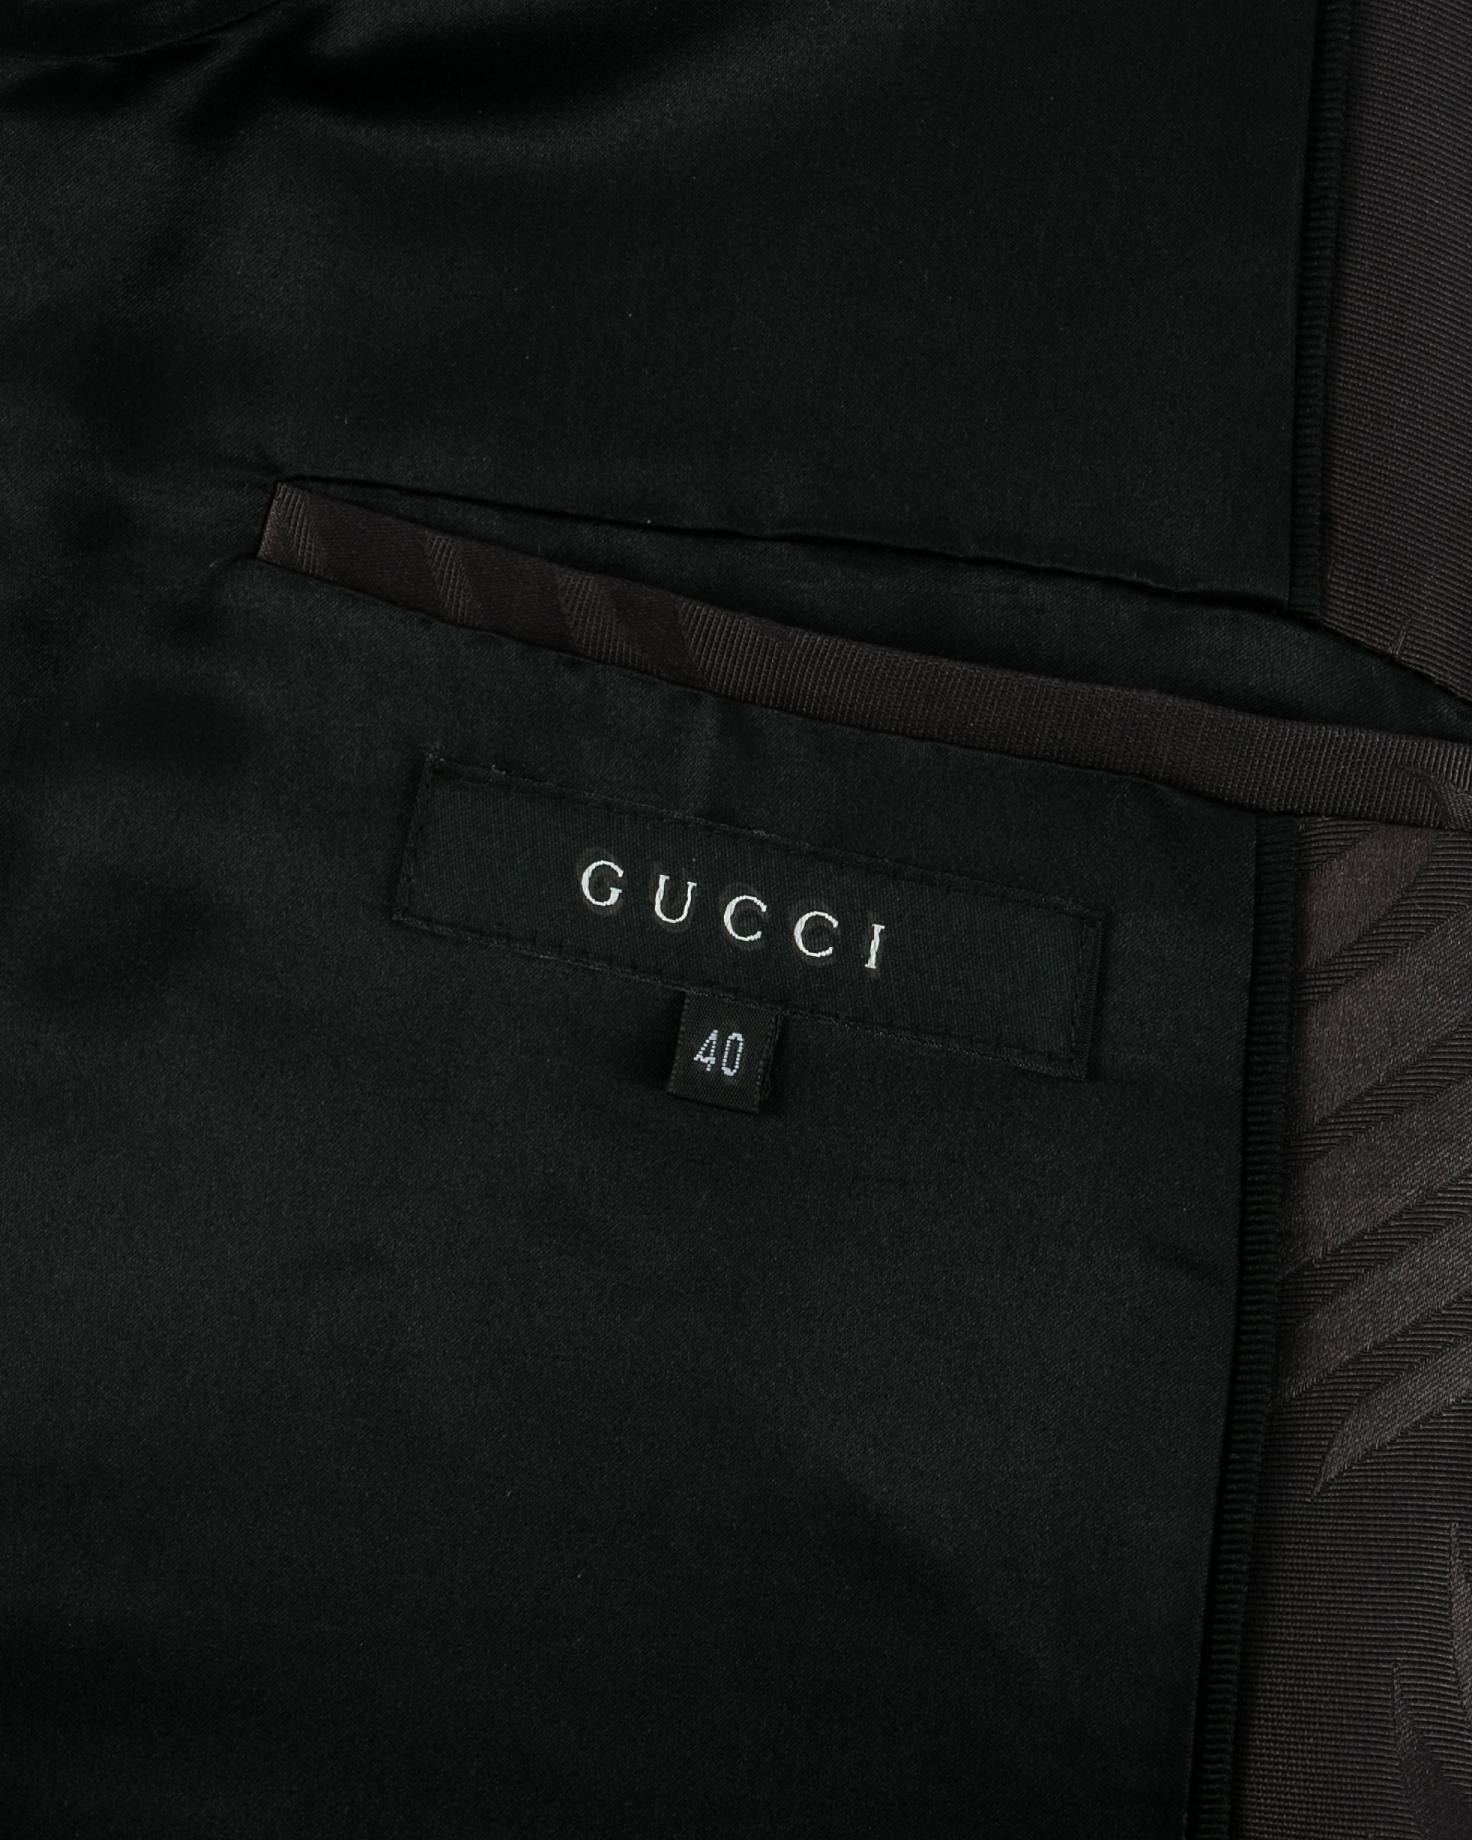 Tom Ford Gucci black silk evening robe with matching Obi belt, A/W 2002 1